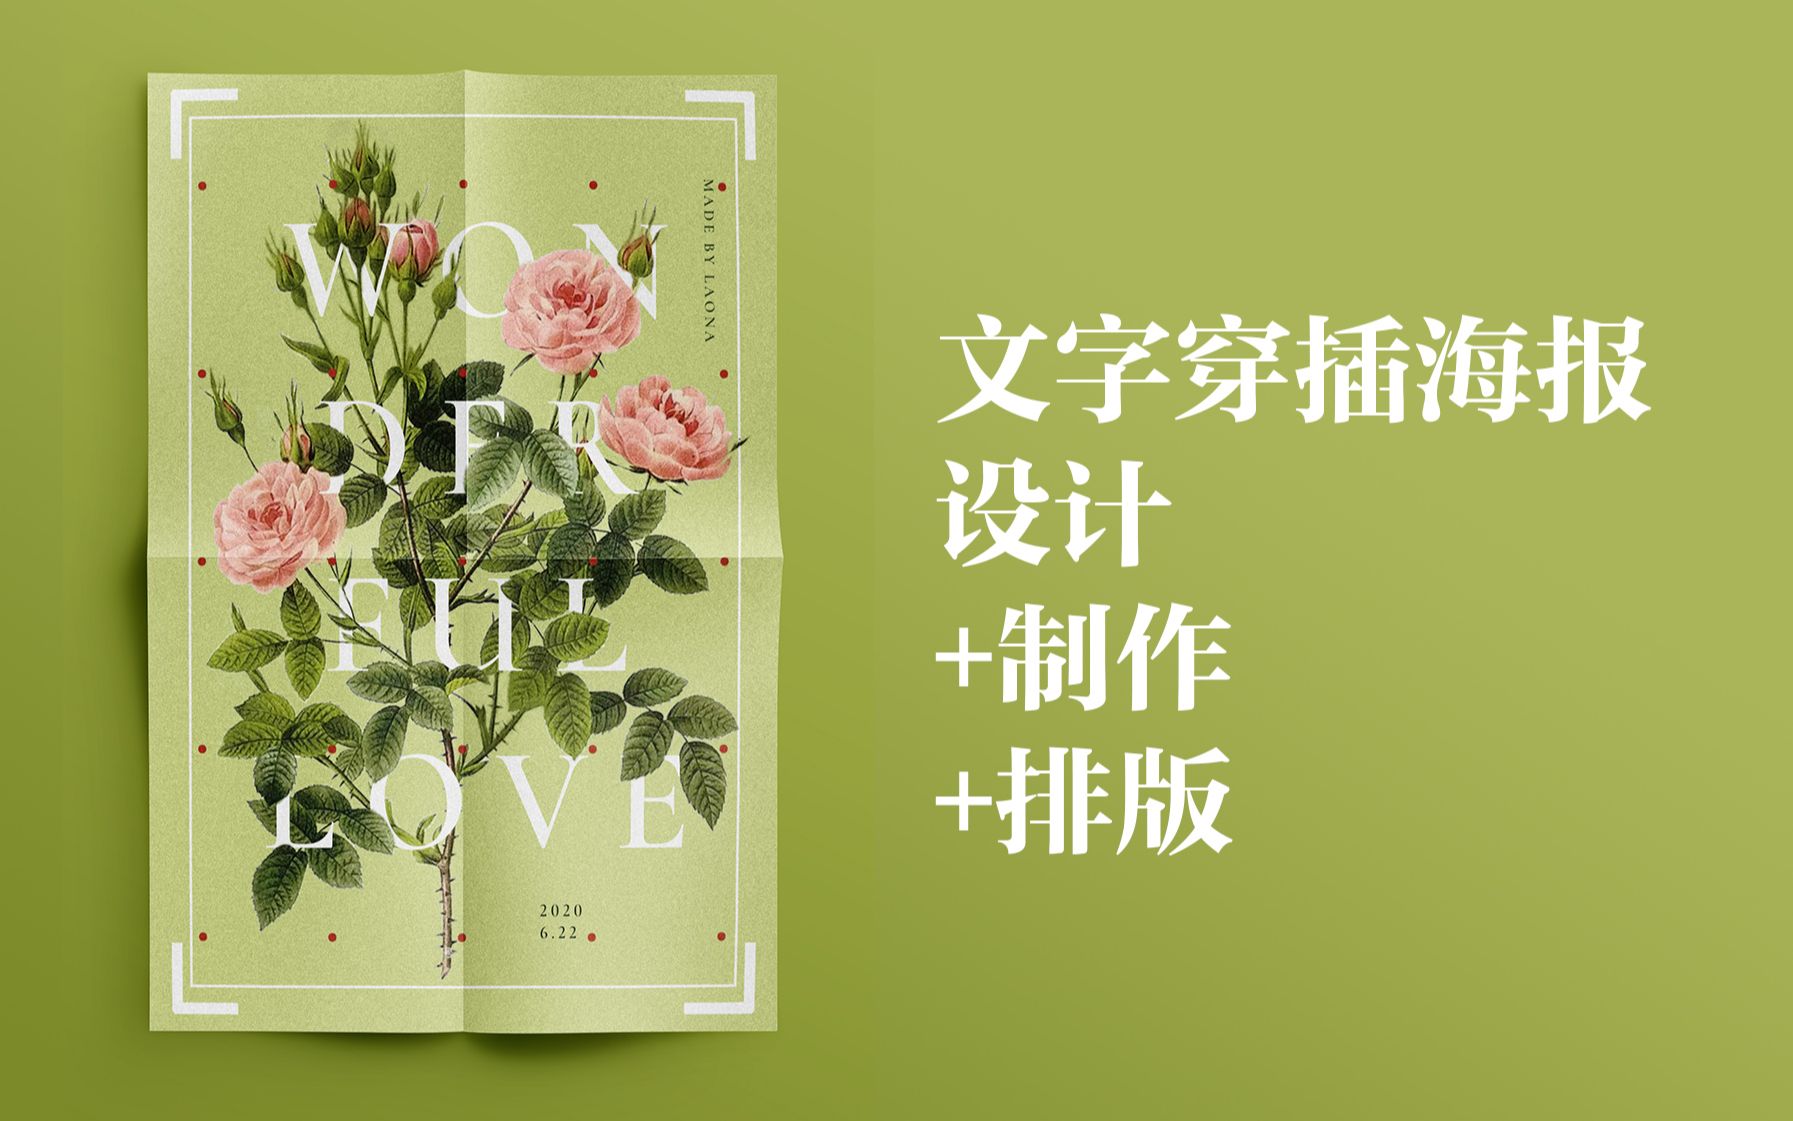 【PS图层蒙版】花卉文字穿插海报第一弹/附带快速抠图方法/花卉素材分享